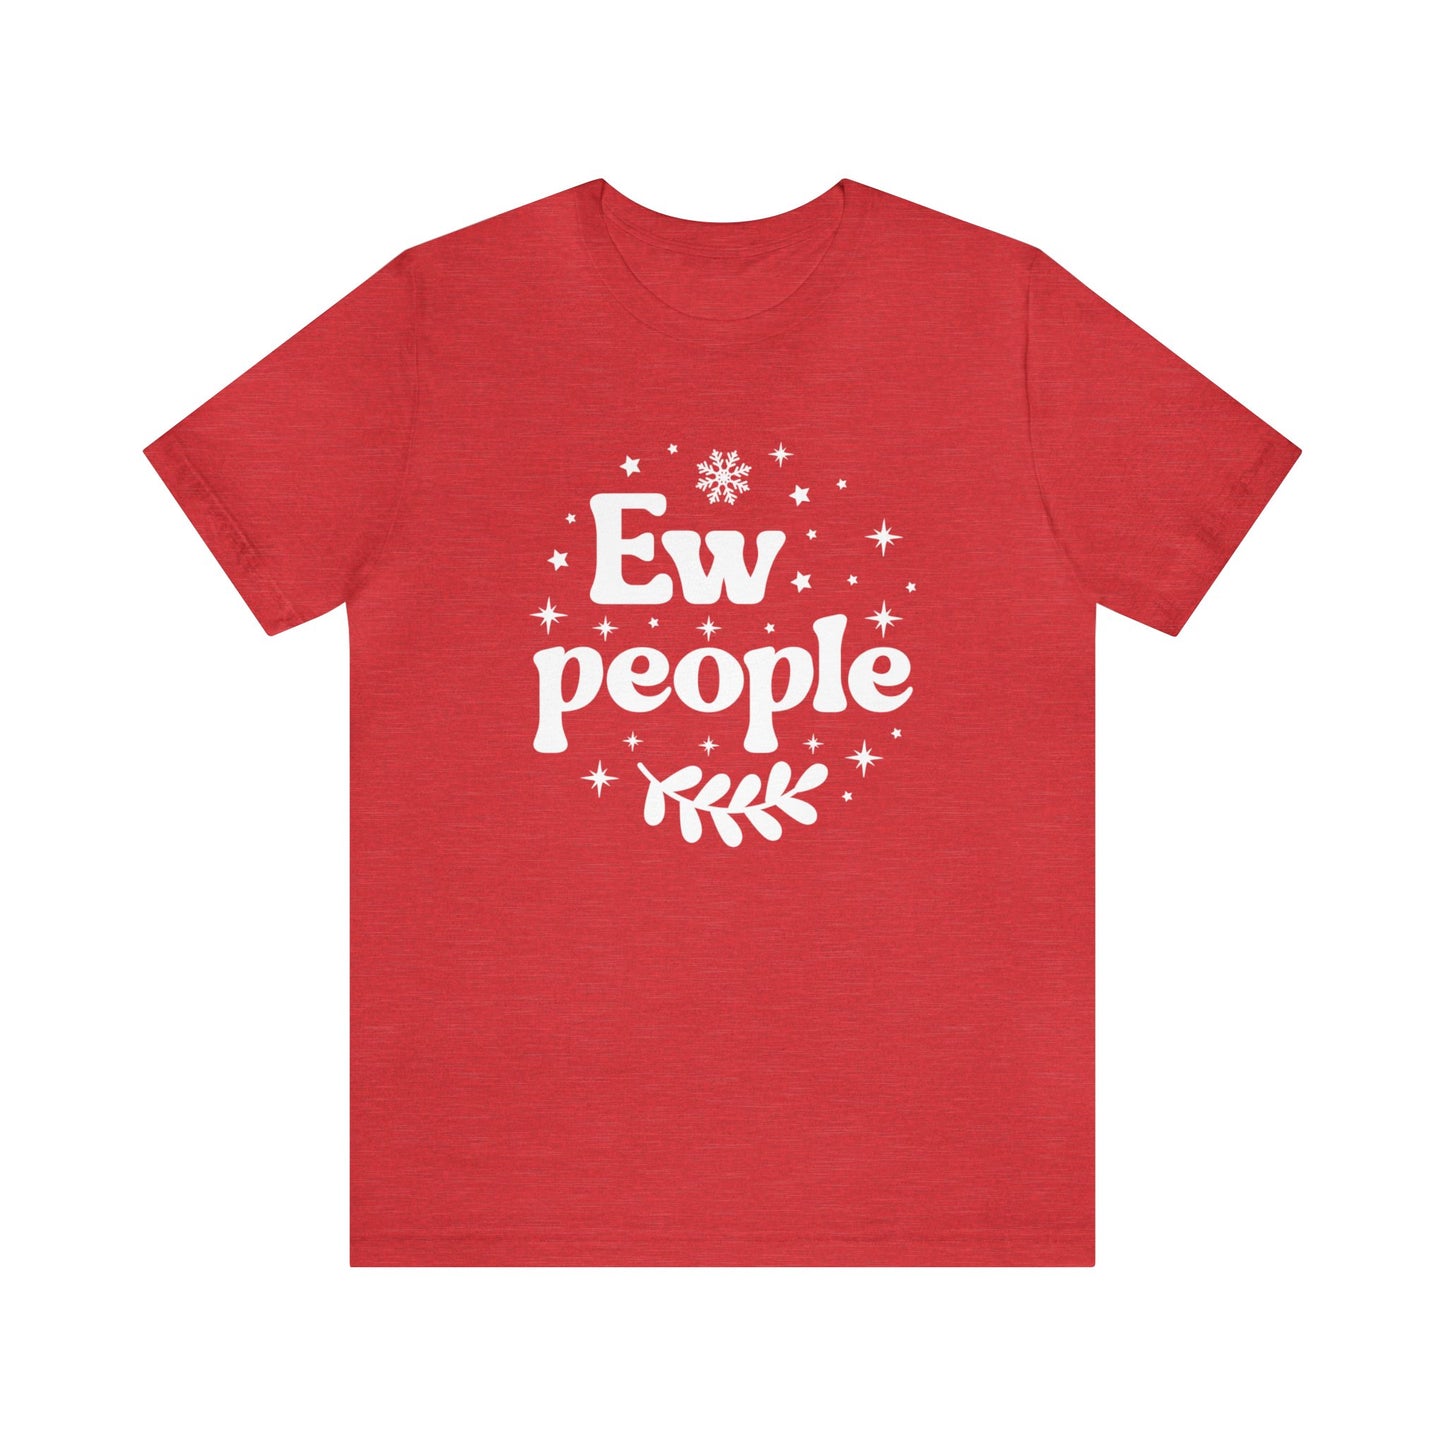 Ew People T-Shirt